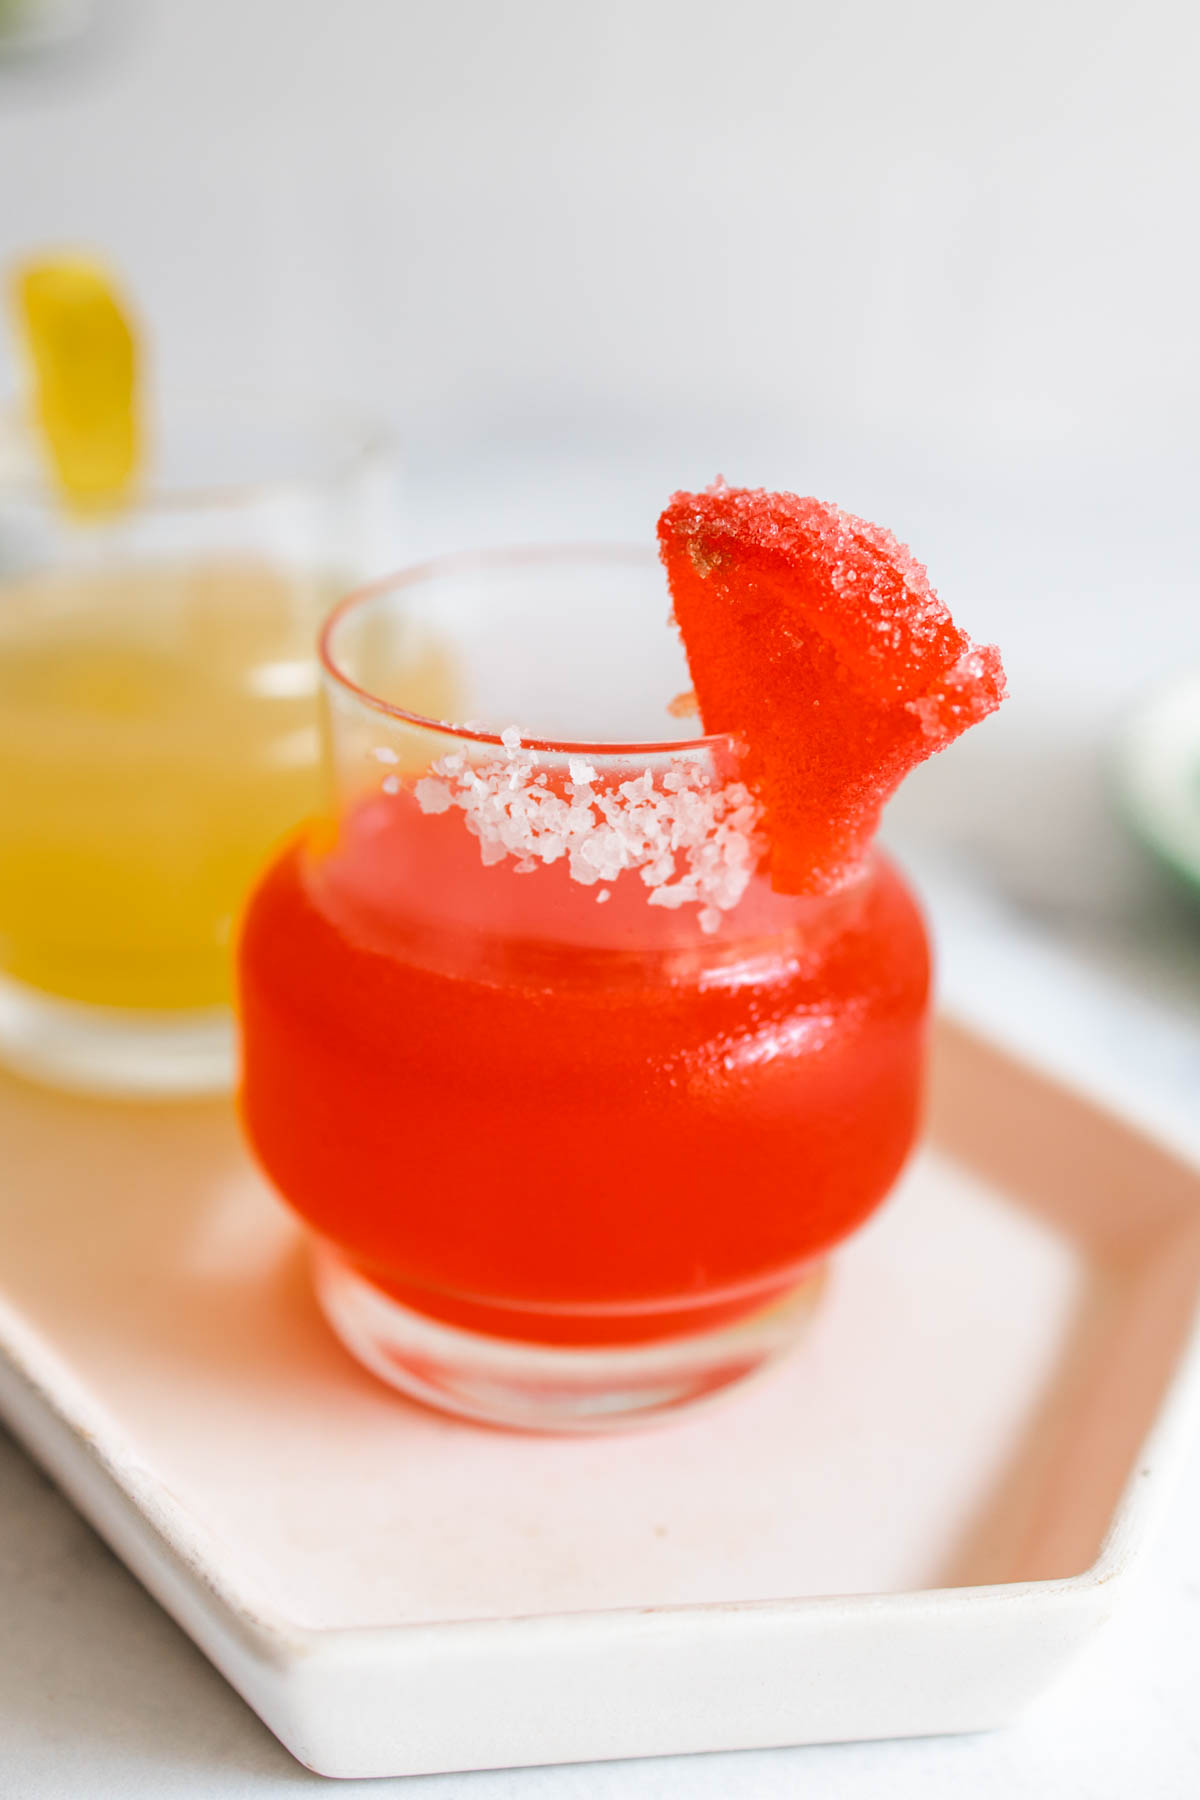 A close-up shot of a beautifully red Deadpool margarita inside a small salt-rimmed glass.